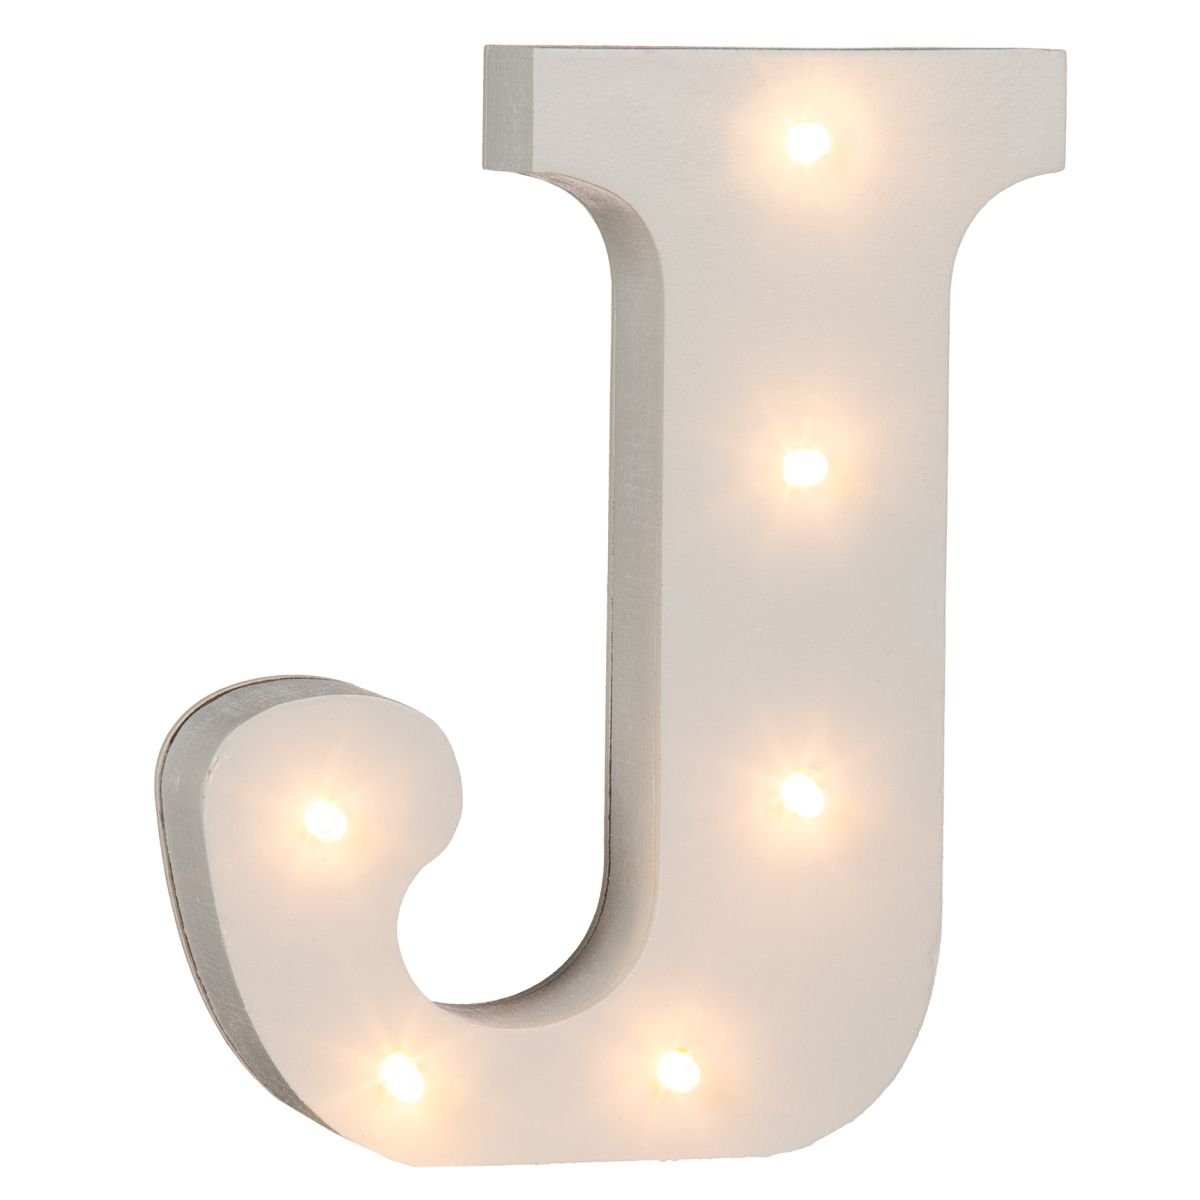 Wood White OOTB Illuminated Letter T Light with 6 LED 